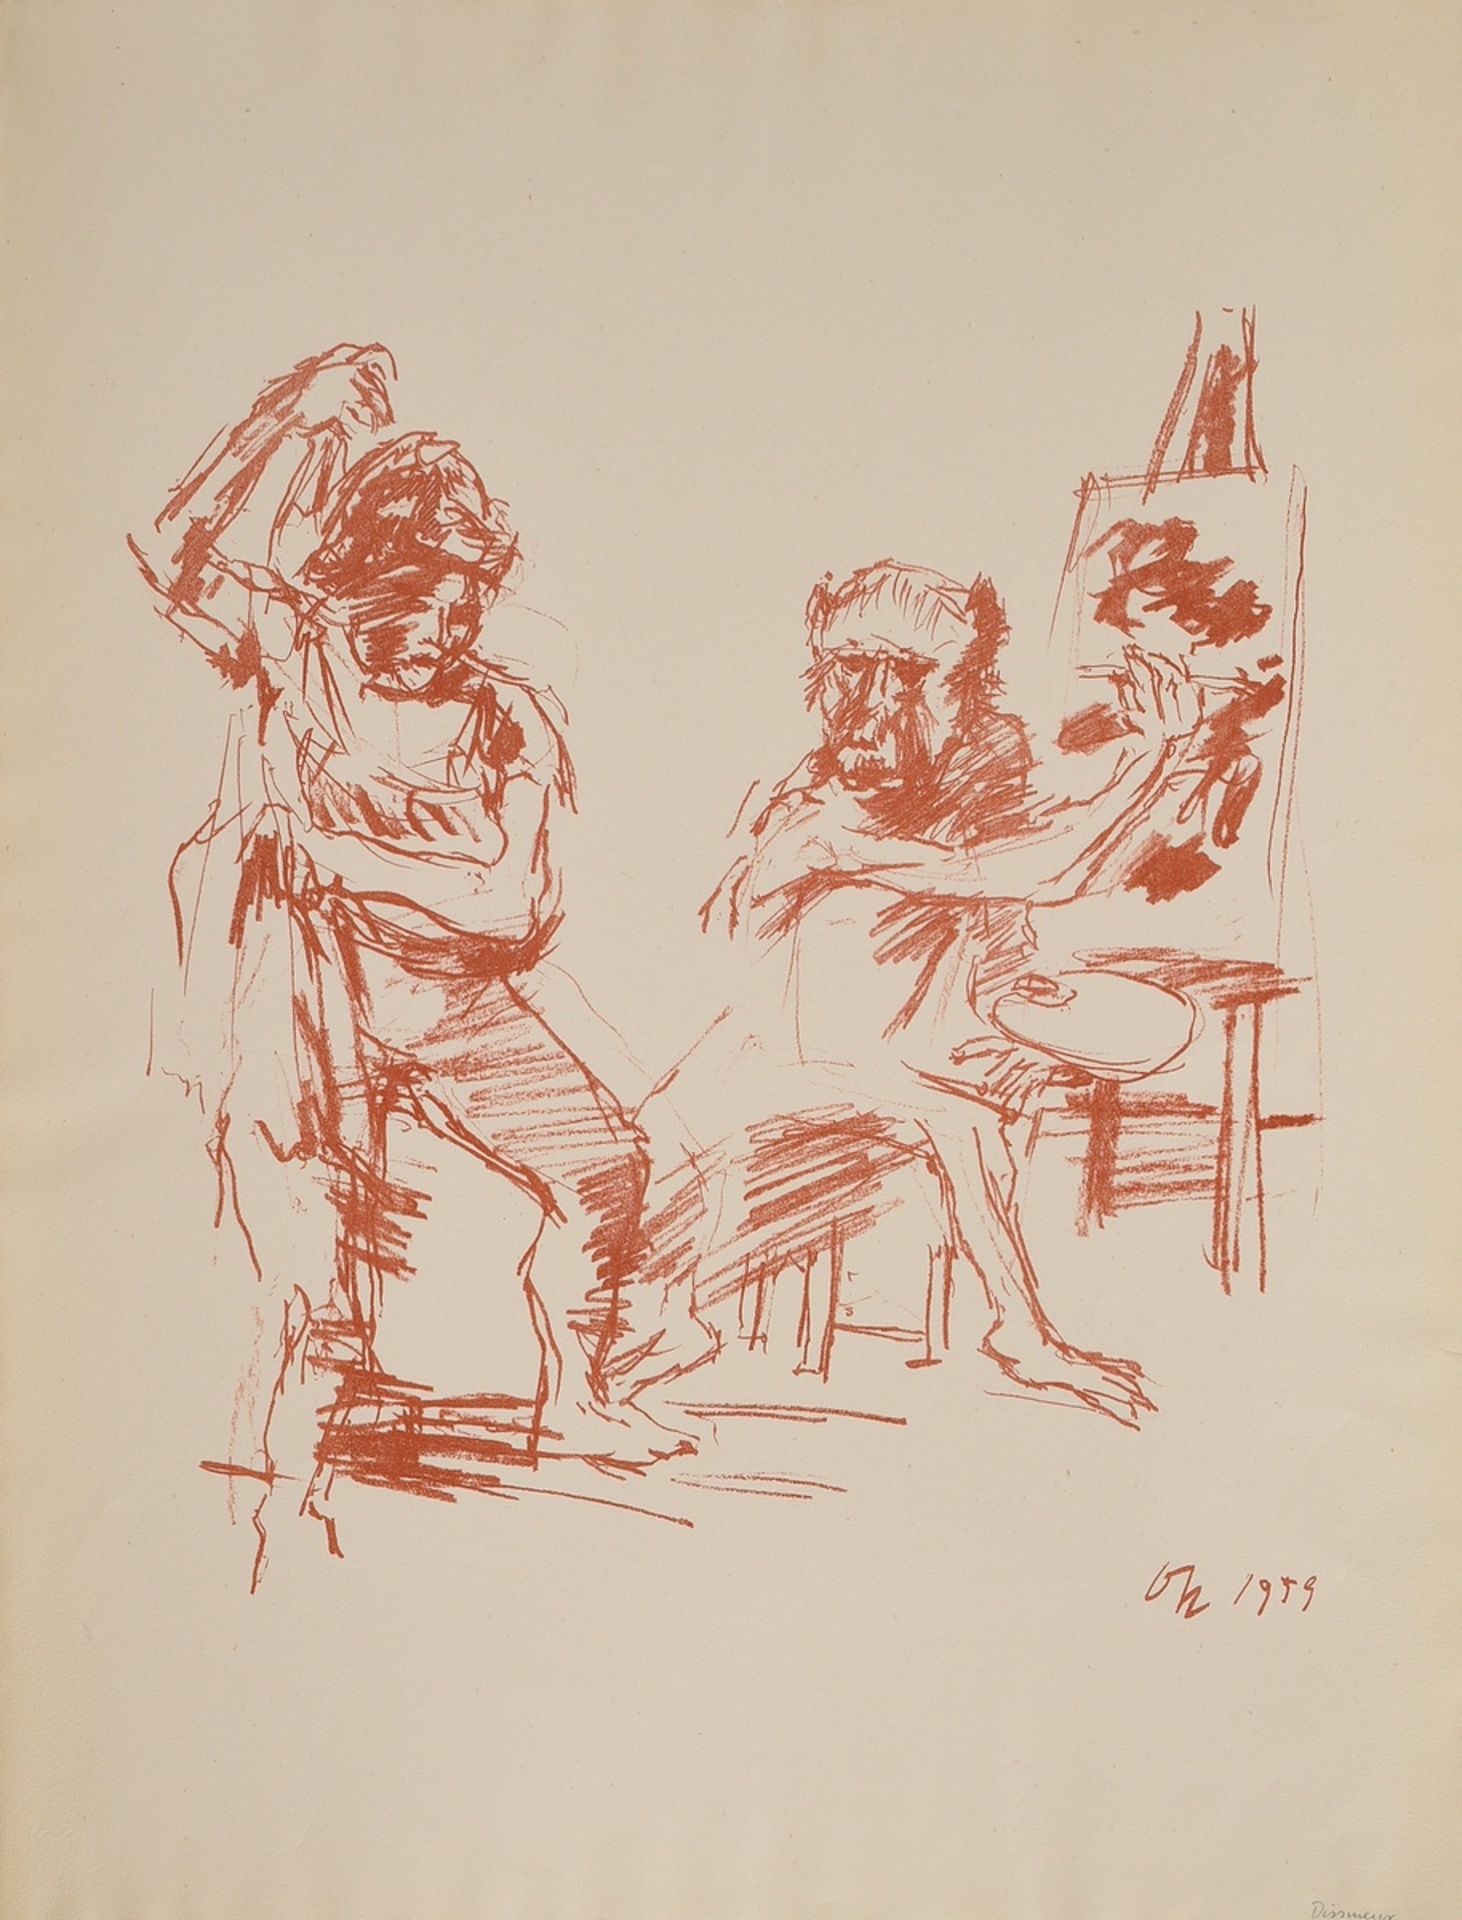 Kokoschka, Oskar (1886-1980) "Action Painter" 1959, Farblithographie, u. i. Stein monogr./dat., Gri